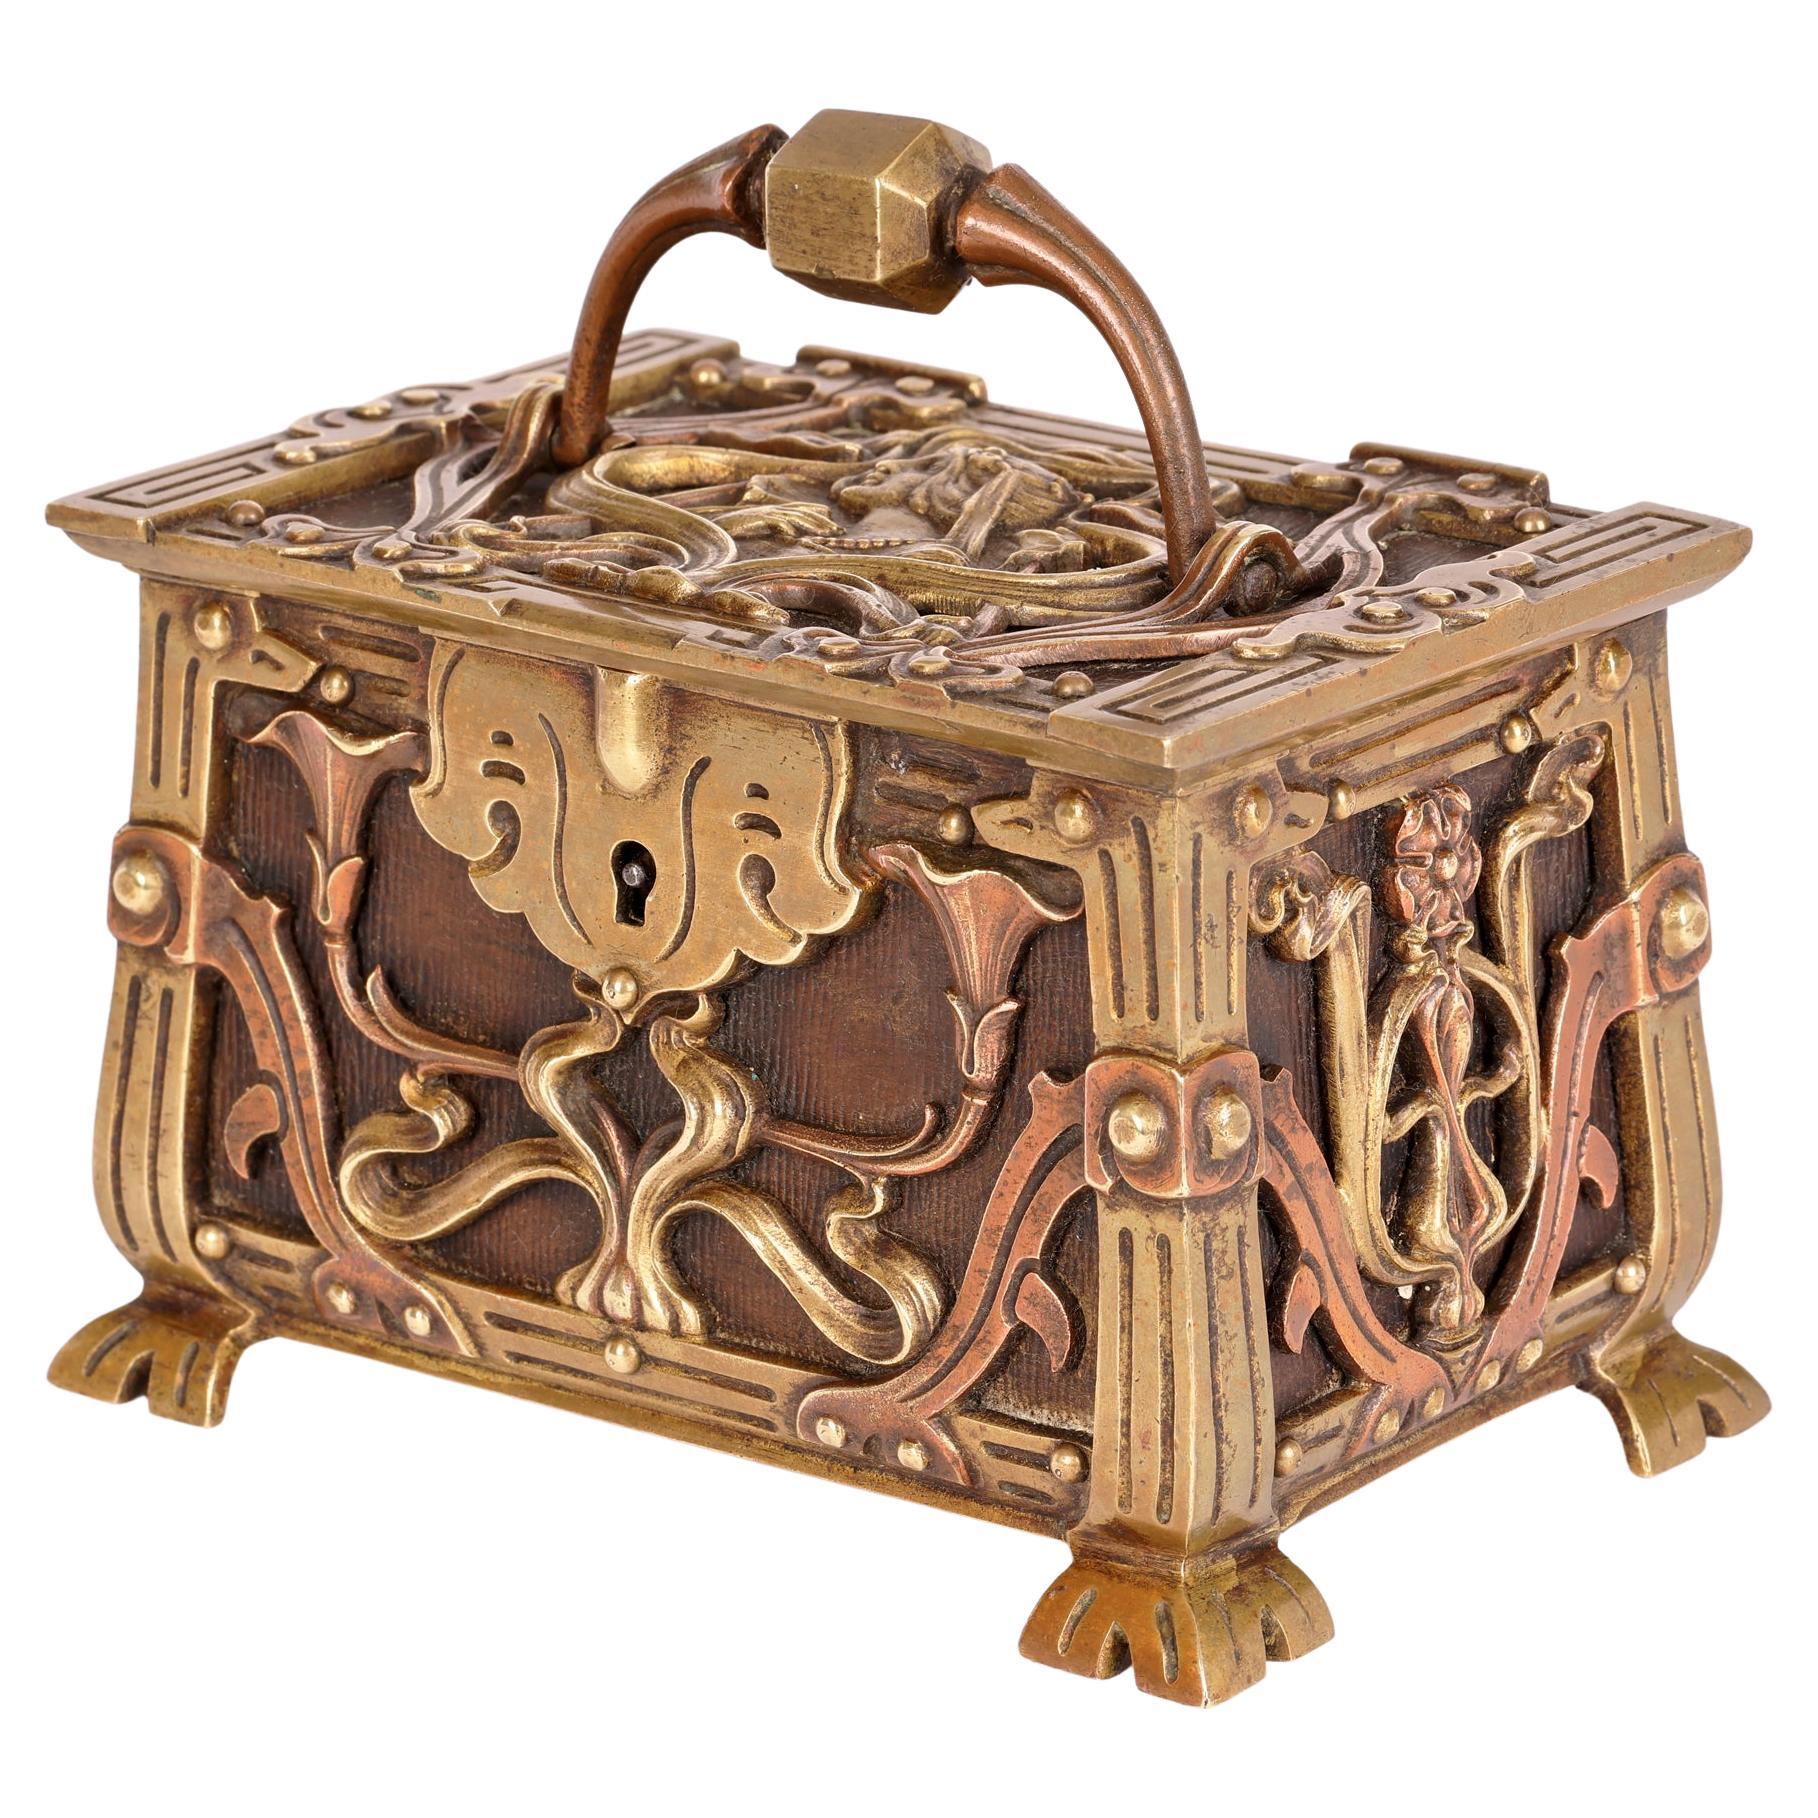 Art Nouveau Exceptional Continental Lidded Brass Casket with Maiden